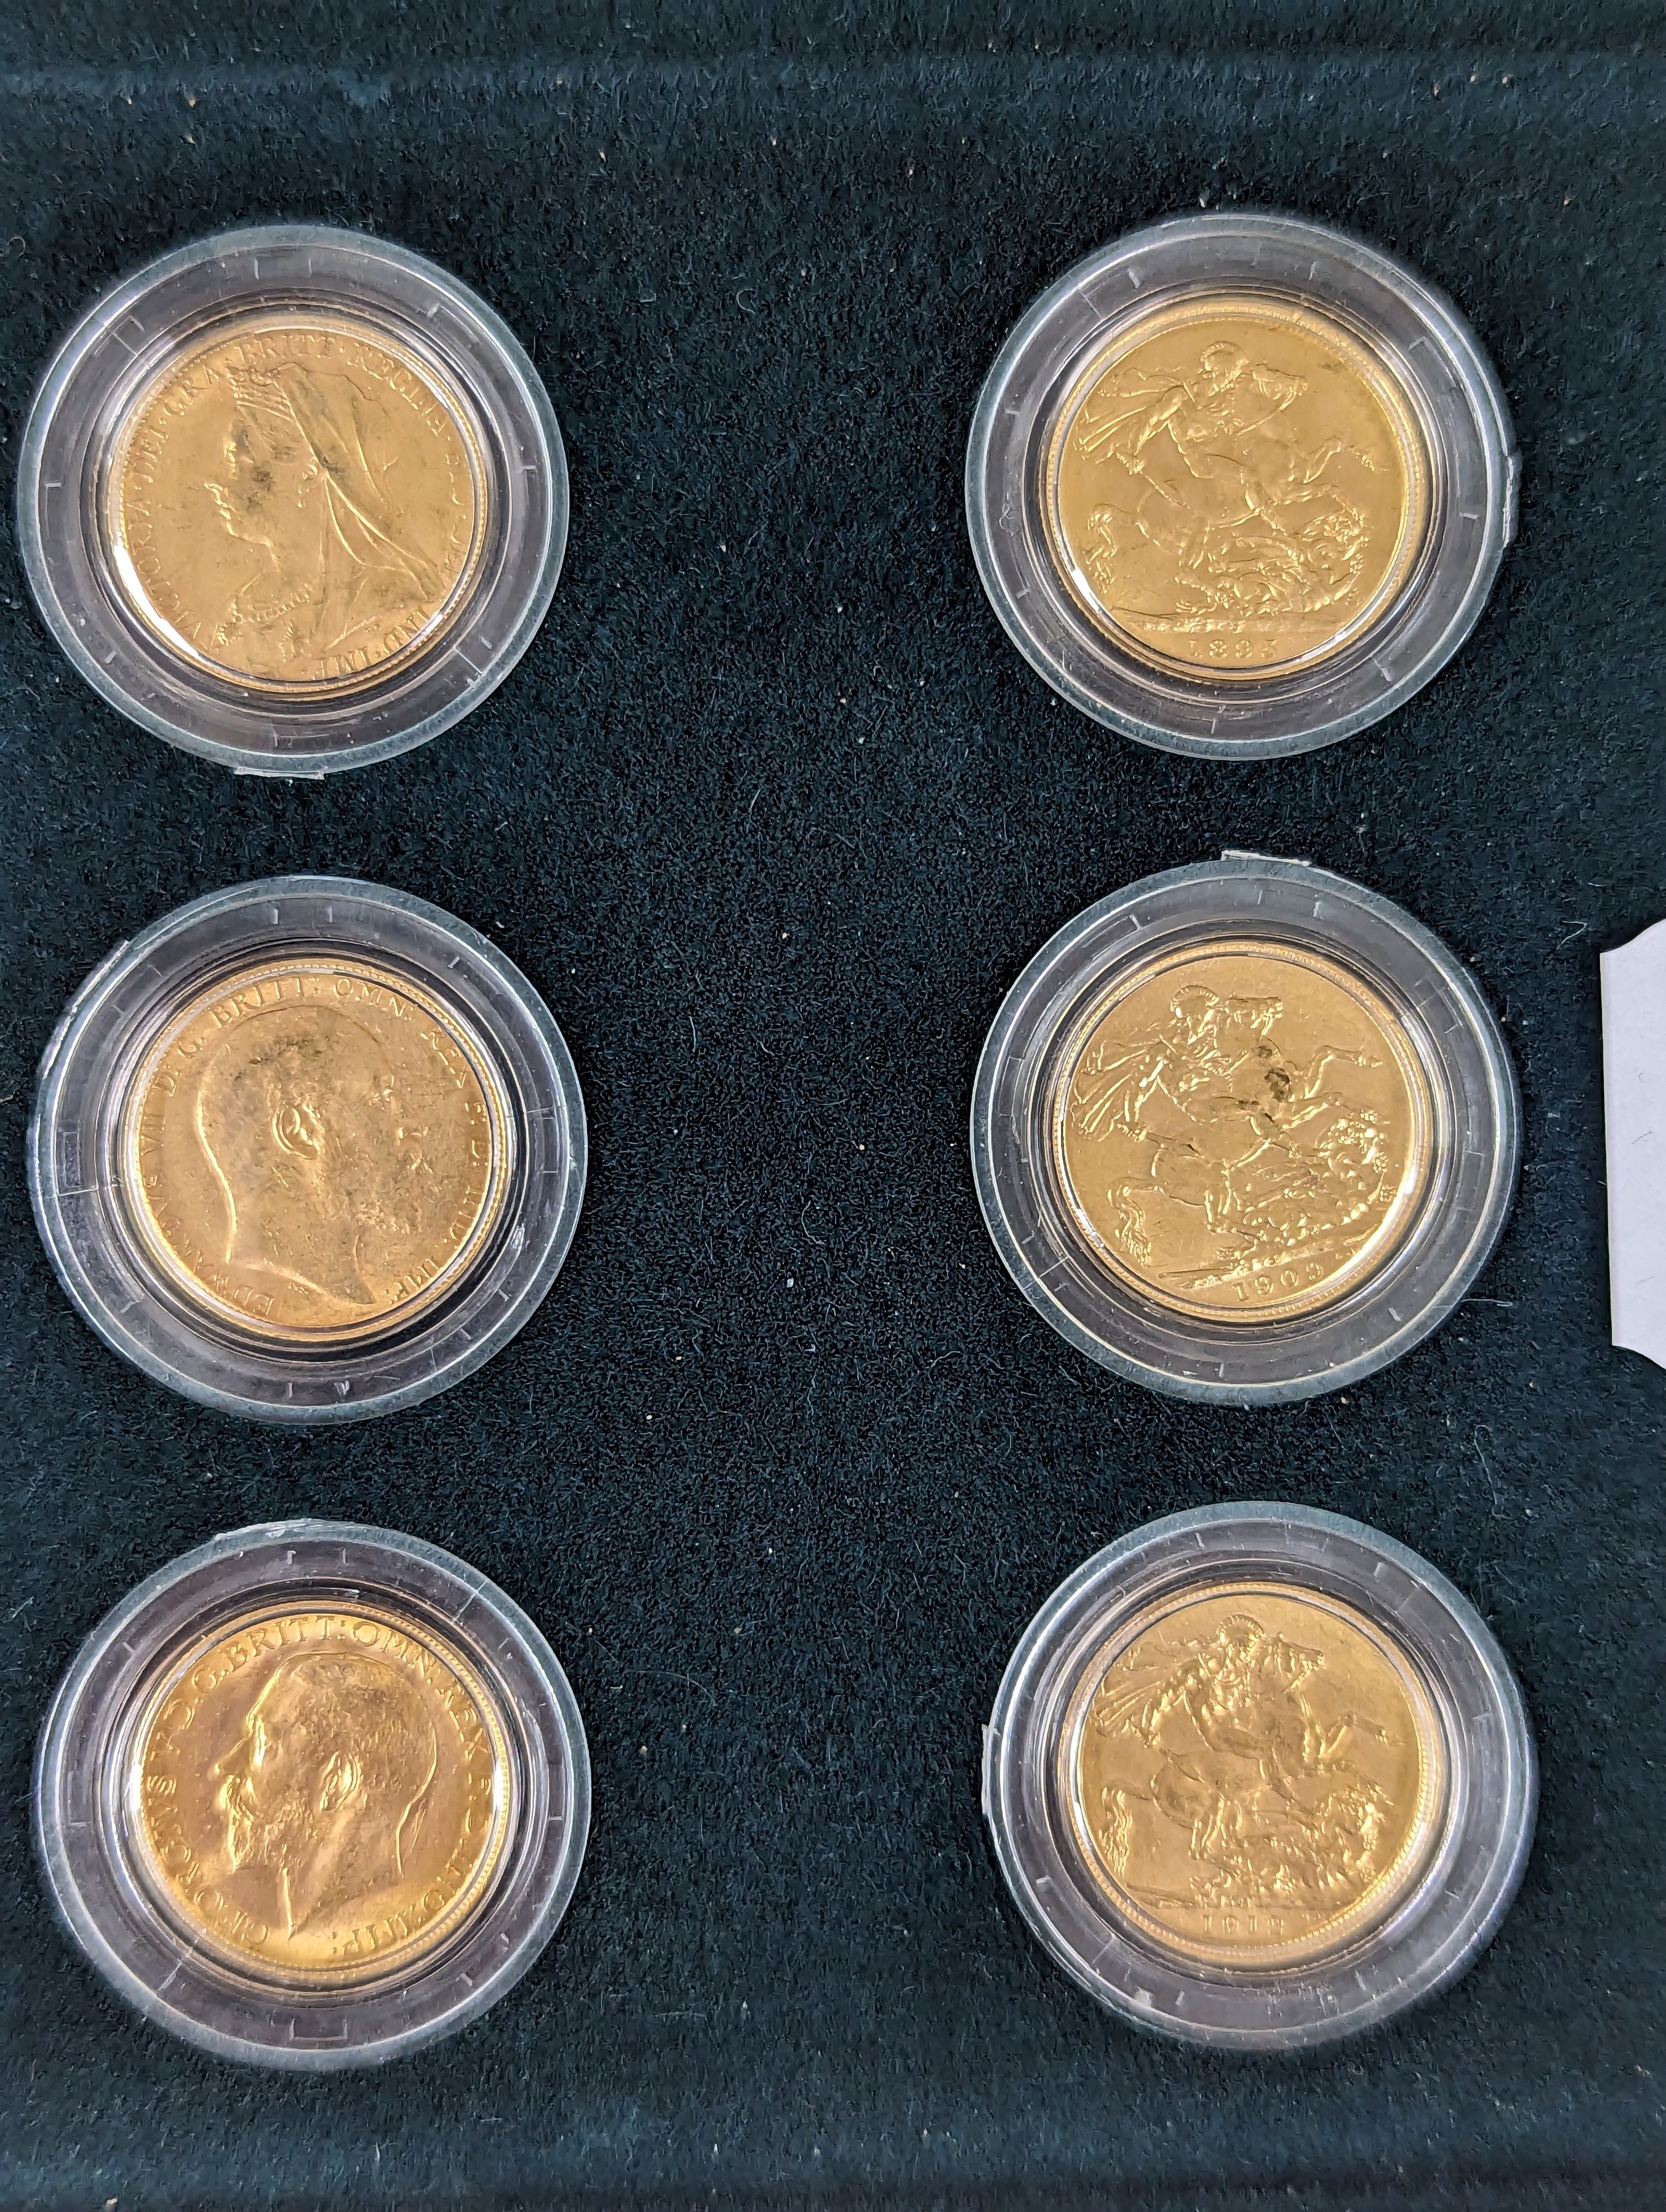 United Kingdom - British Gold Sovereigns (12) - Royal Mint ' Three Monarchs Mintmark Set', - Image 2 of 4